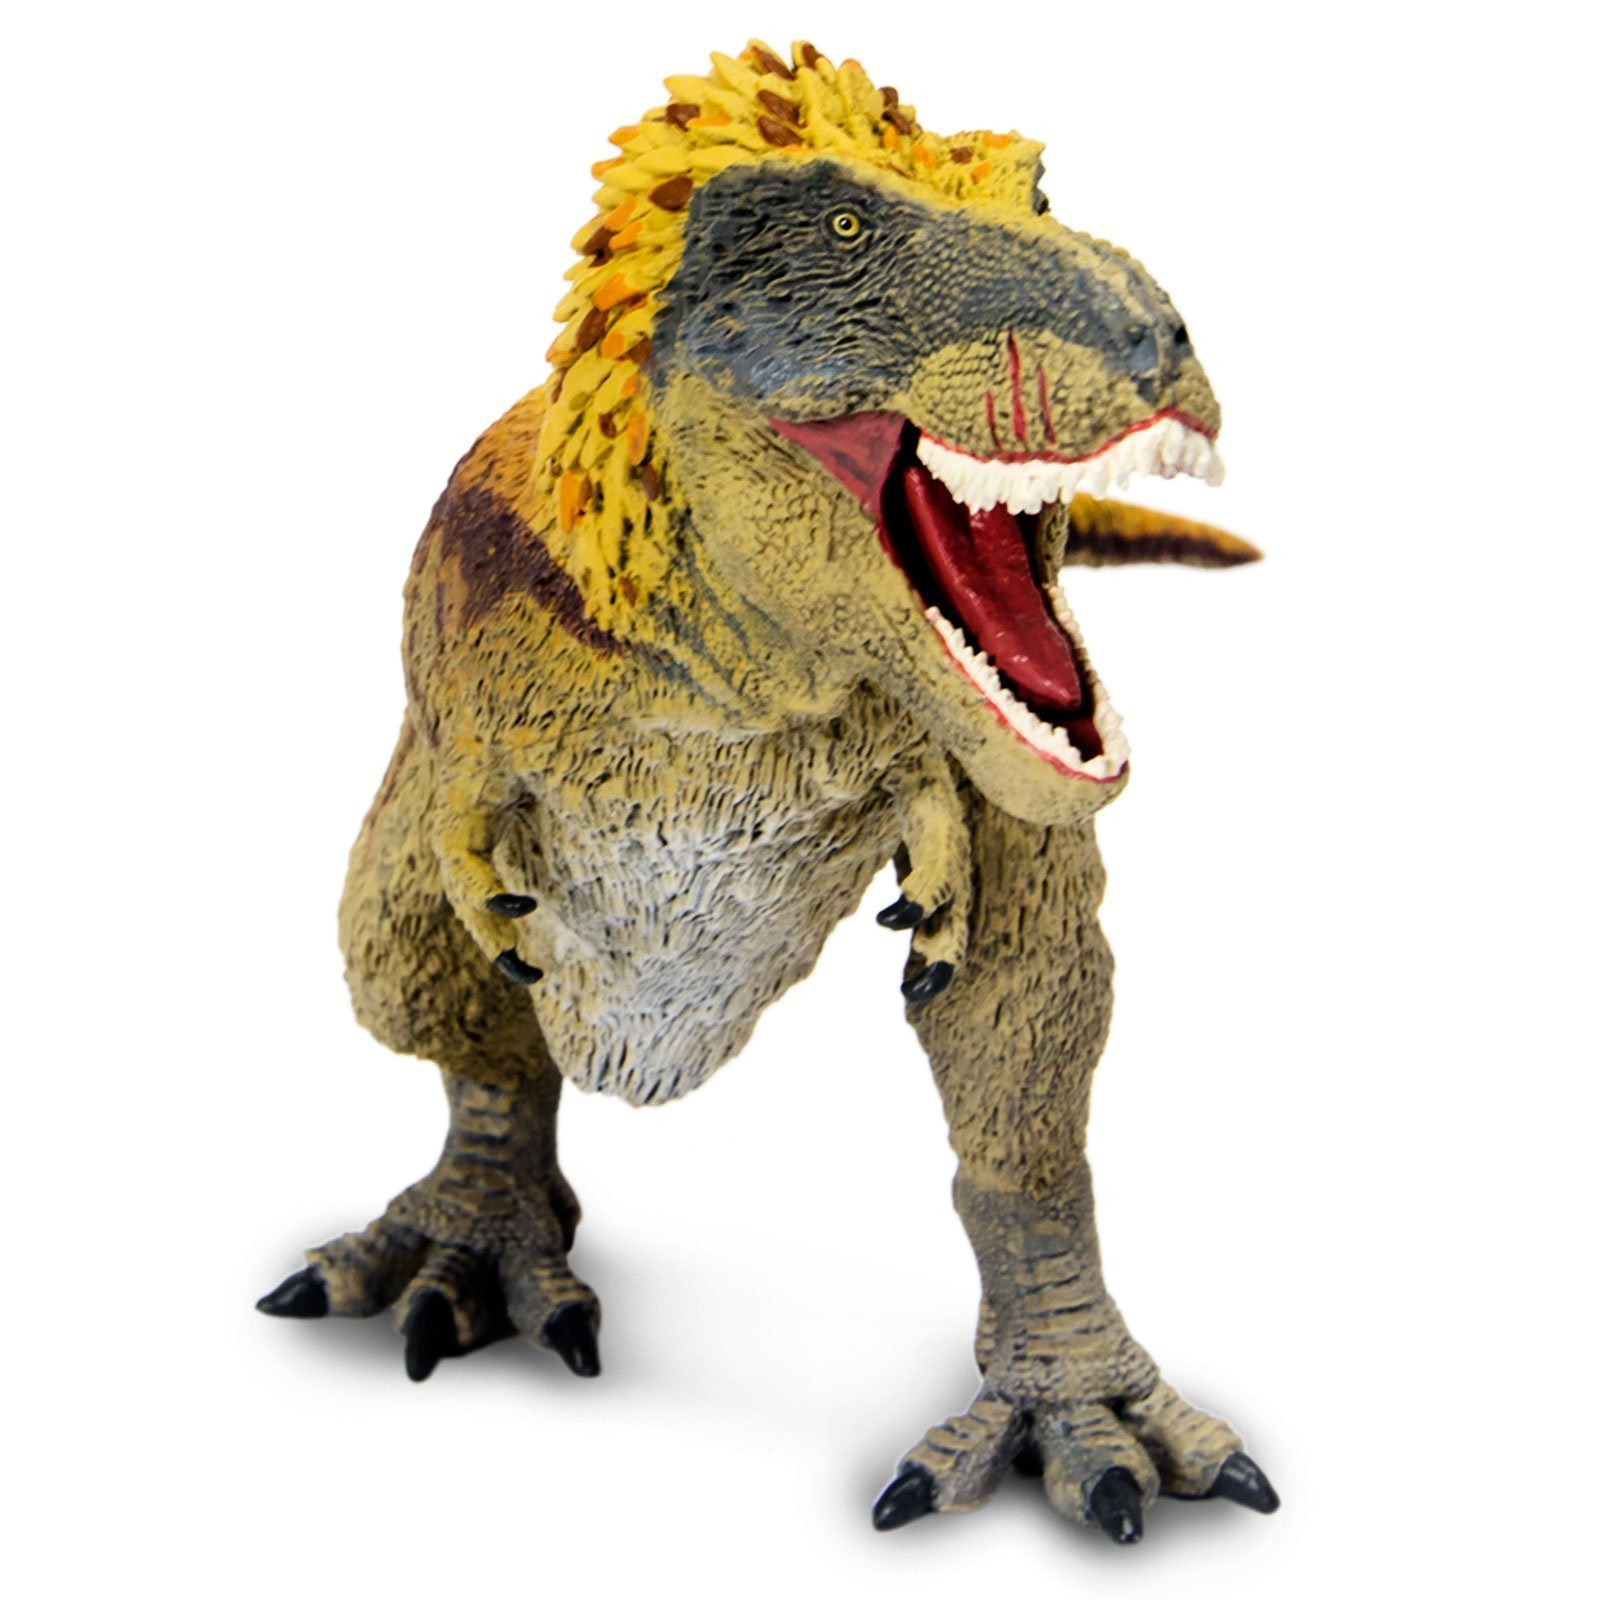 Deinocheirus Dinosaur Toy Model Figure by Safari Ltd 303229 New with Tag 